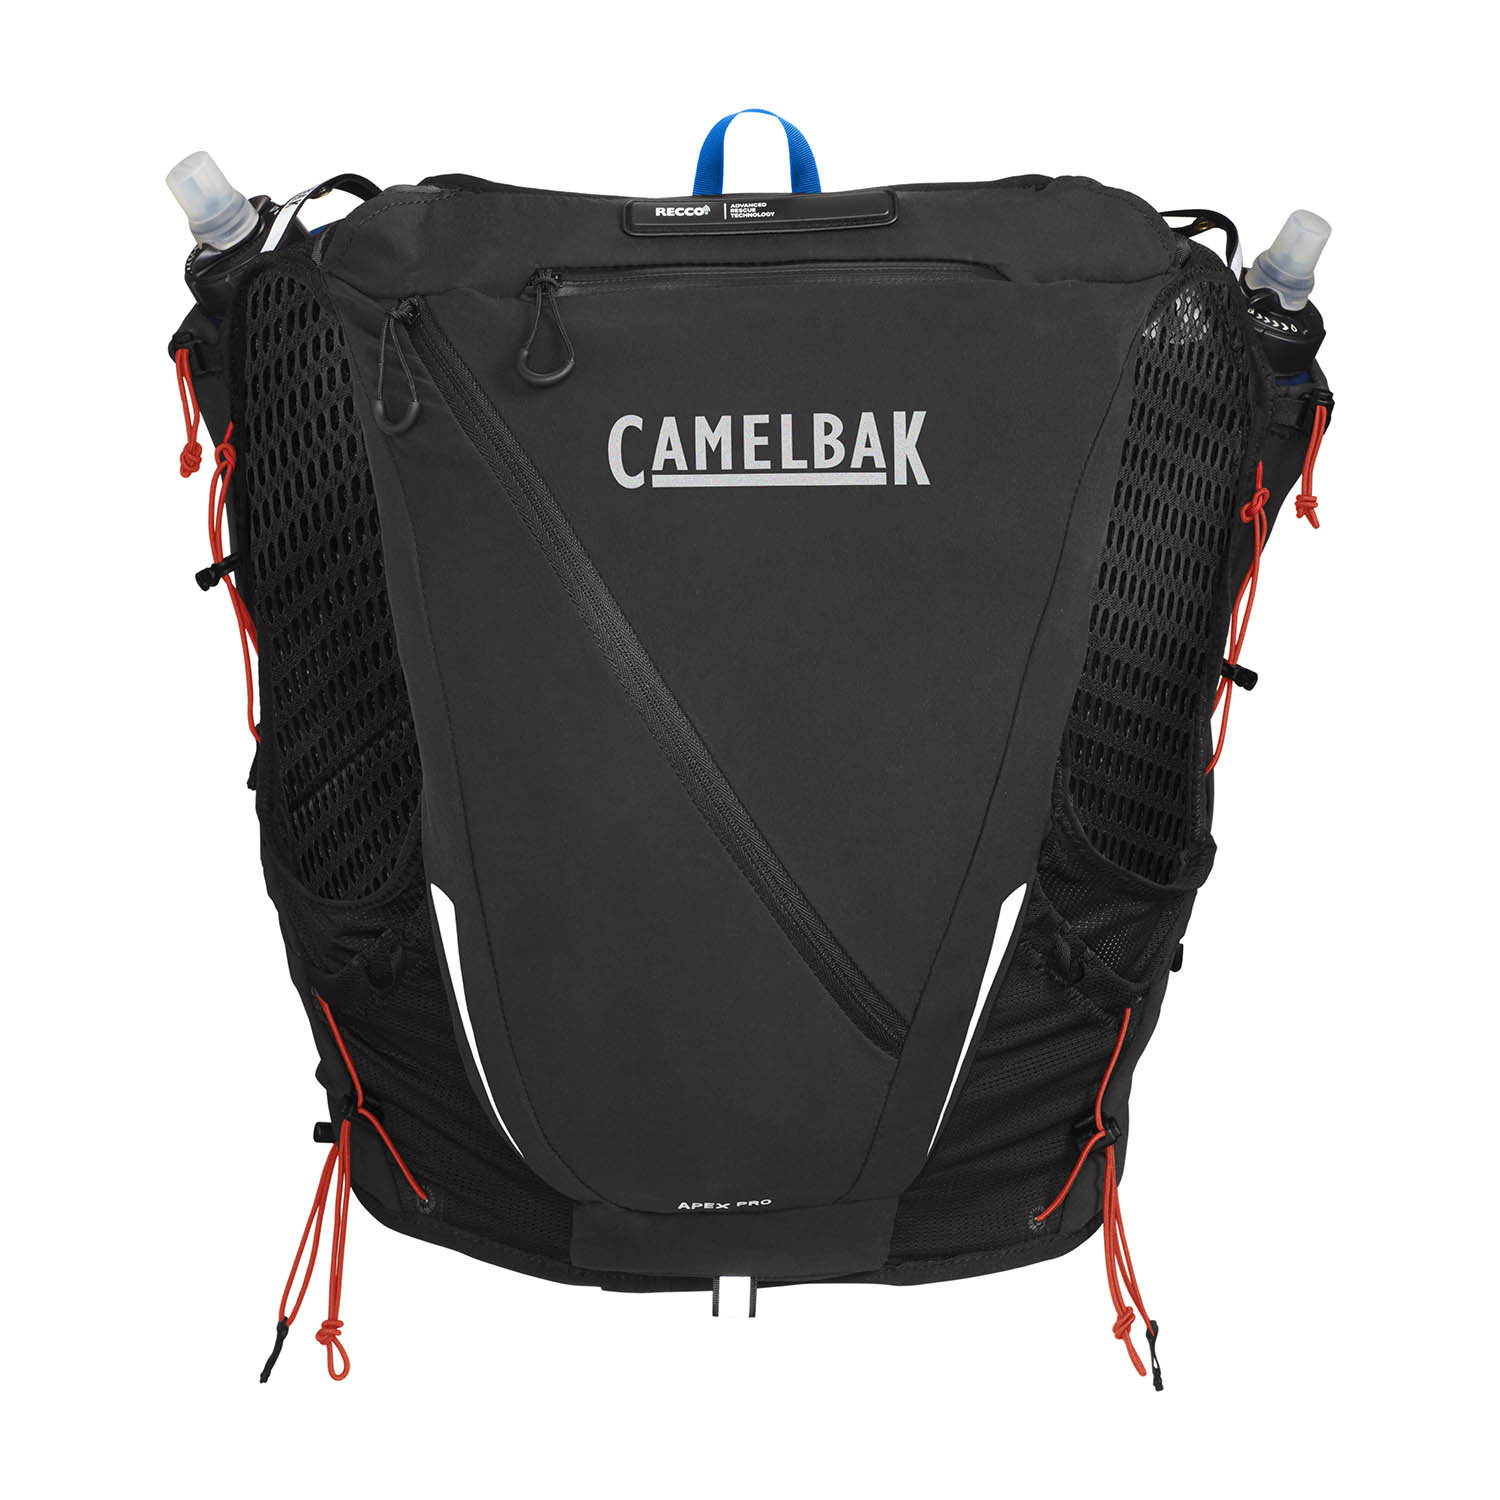 Camelbak Apex Pro Run 12 Mochila - Black